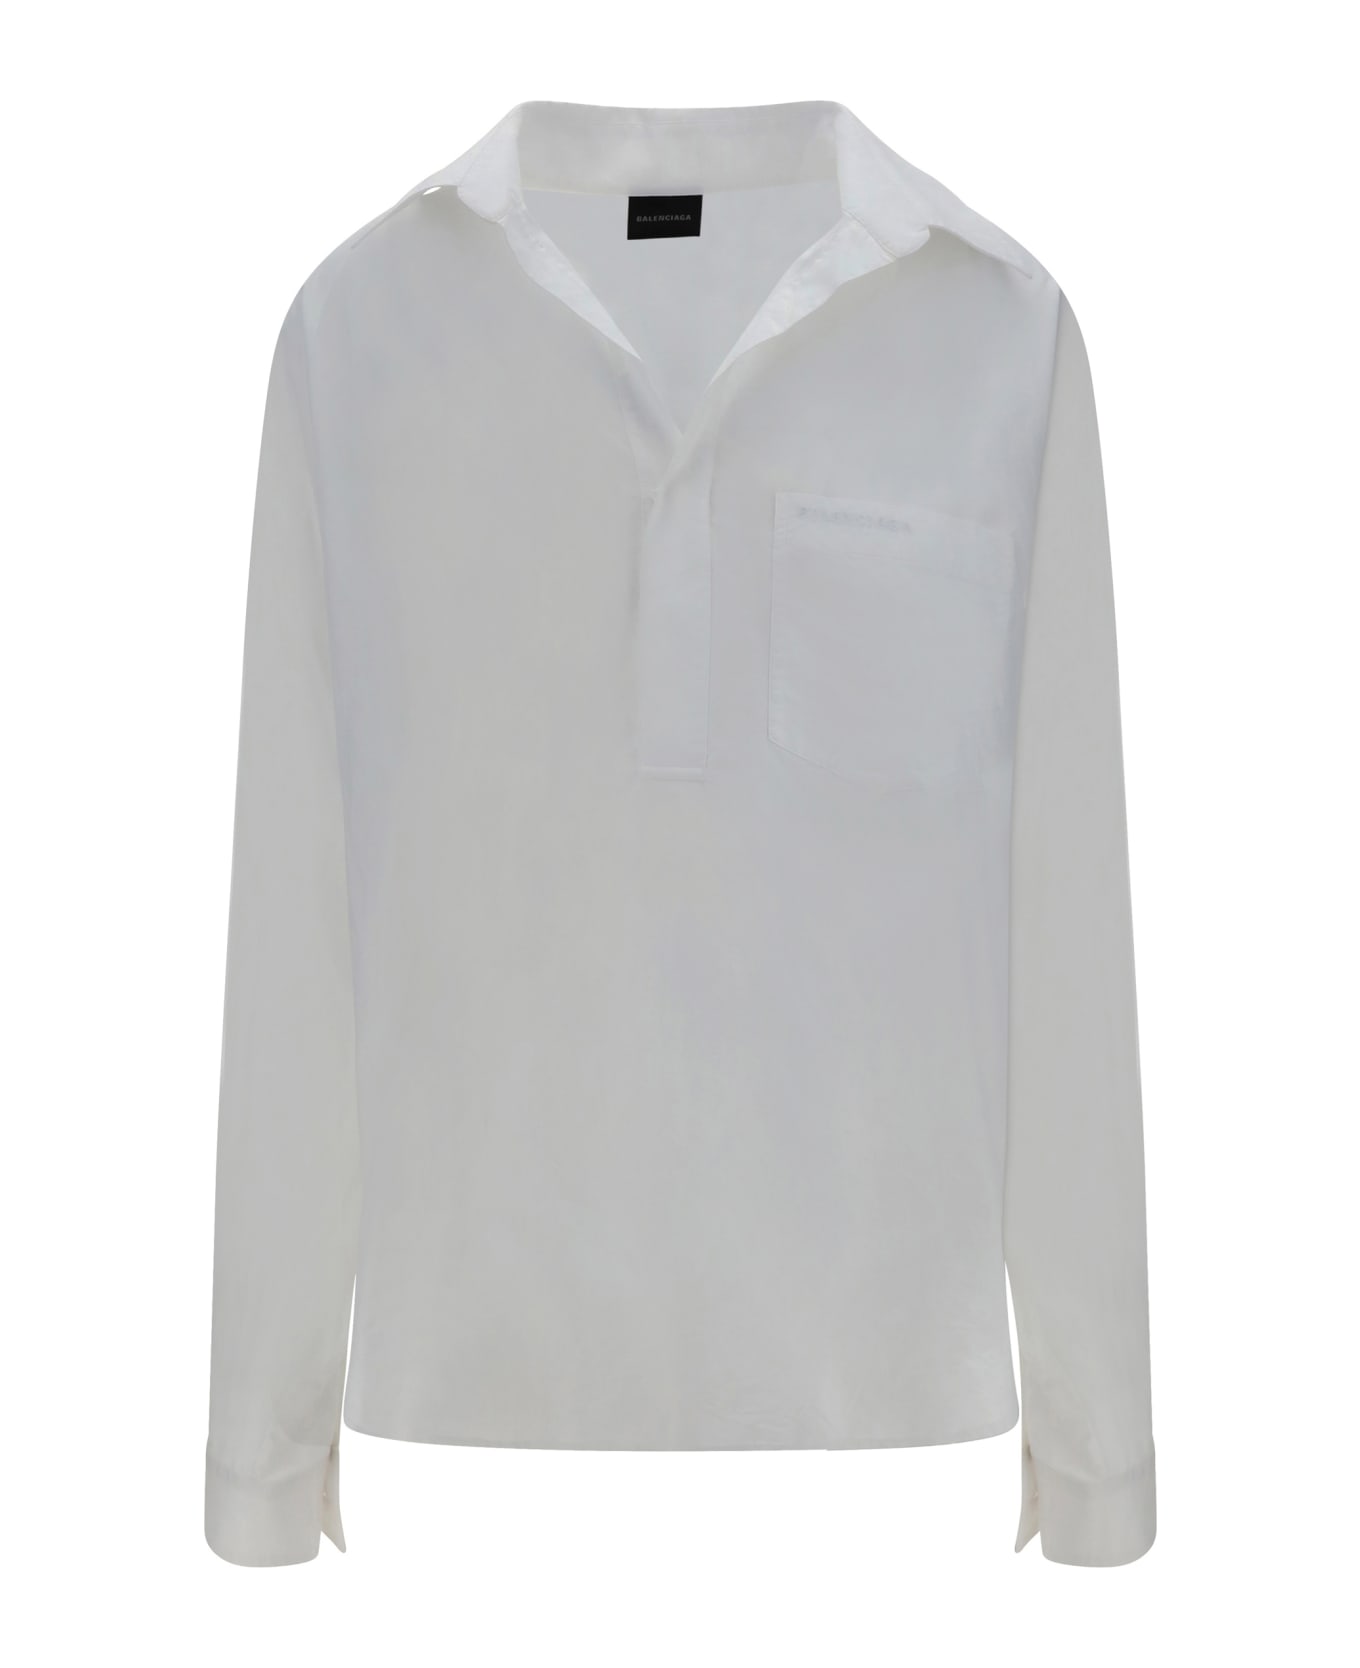 Balenciaga Crinkled Cotton Shirt - White